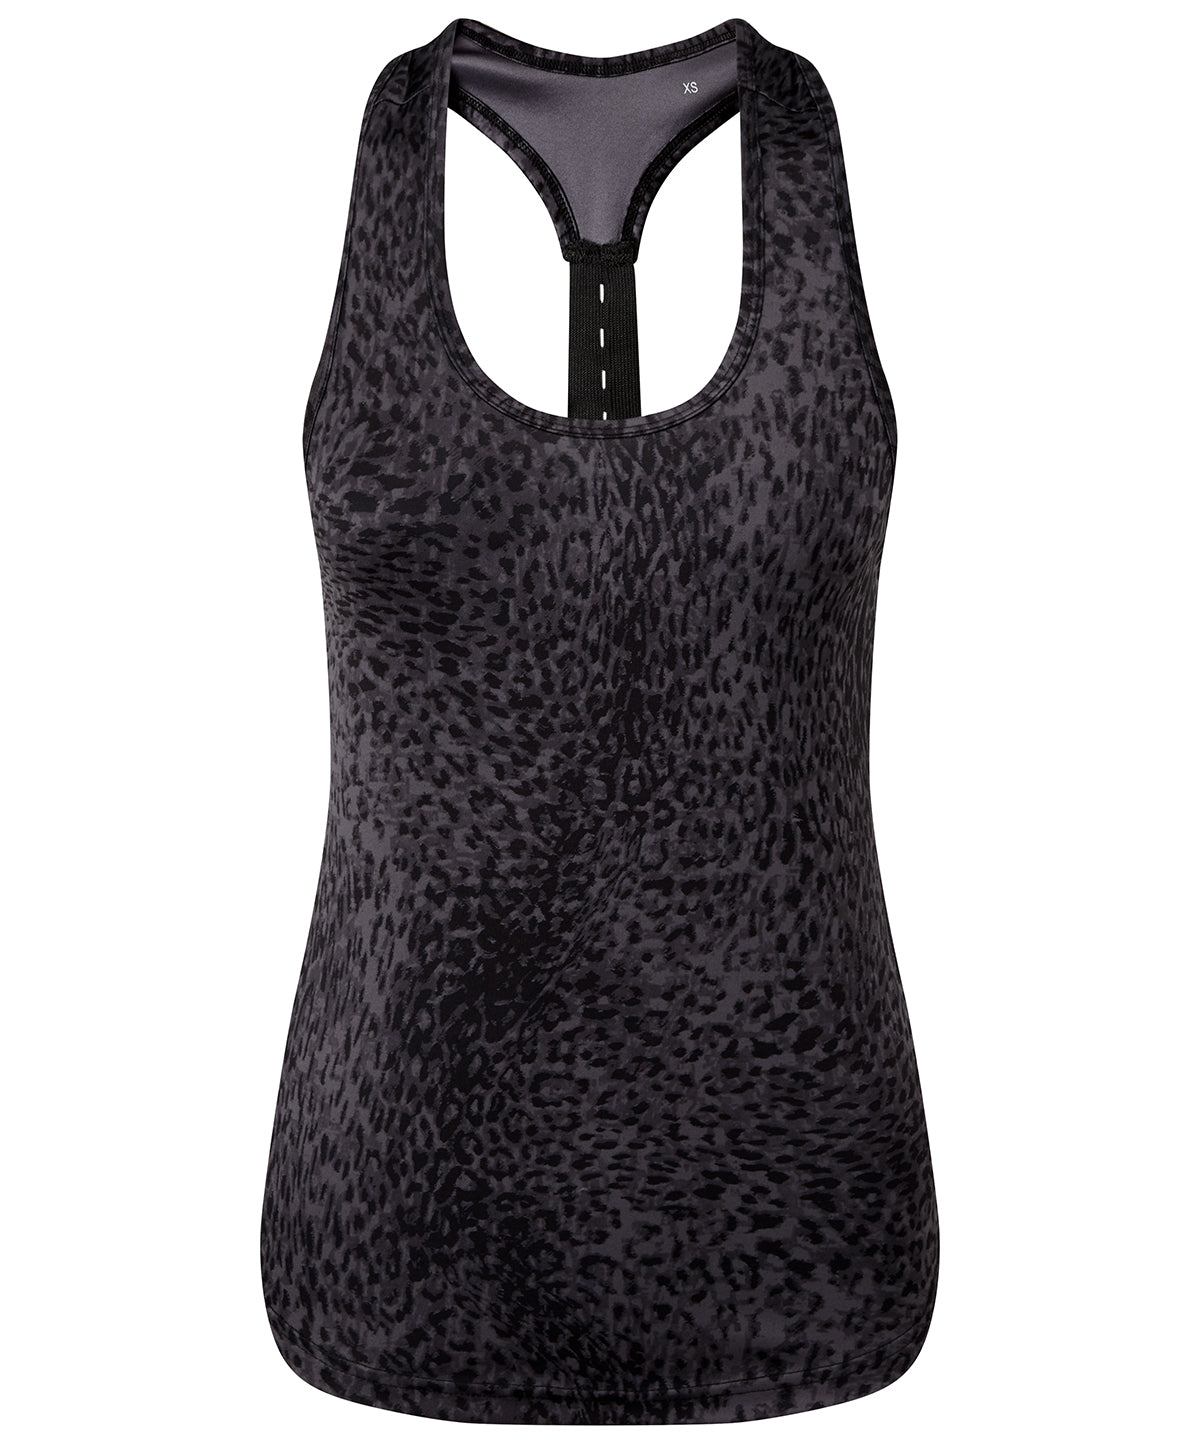 Vesti - Women's TriDri® Performance Strap Back Animal Printed Vest